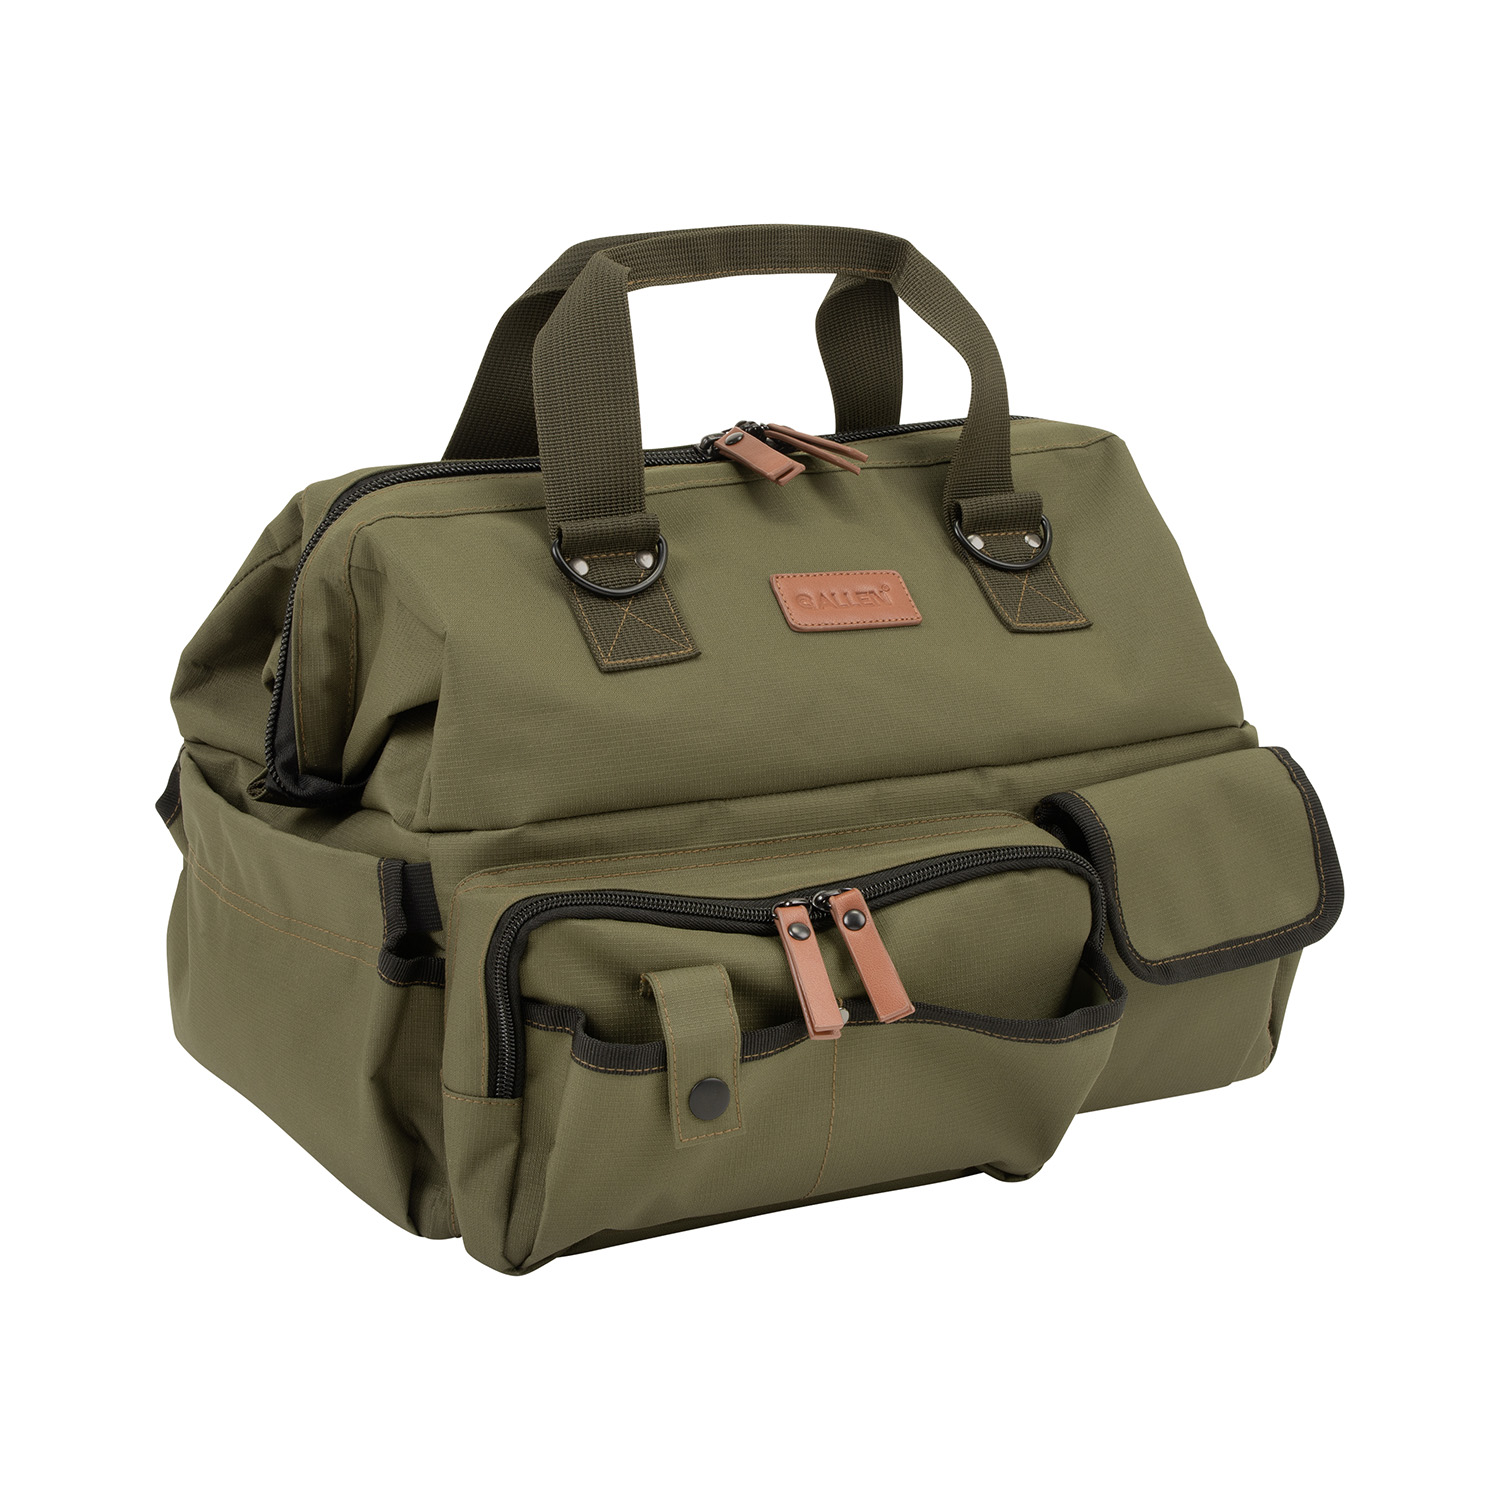 Allen 8329 Triumph Range Bag Green 600D Polyester Ripstop with Lockable Main Compartment, Fold-Up Pistol Mat, Webbed Carry Handles & Pockets